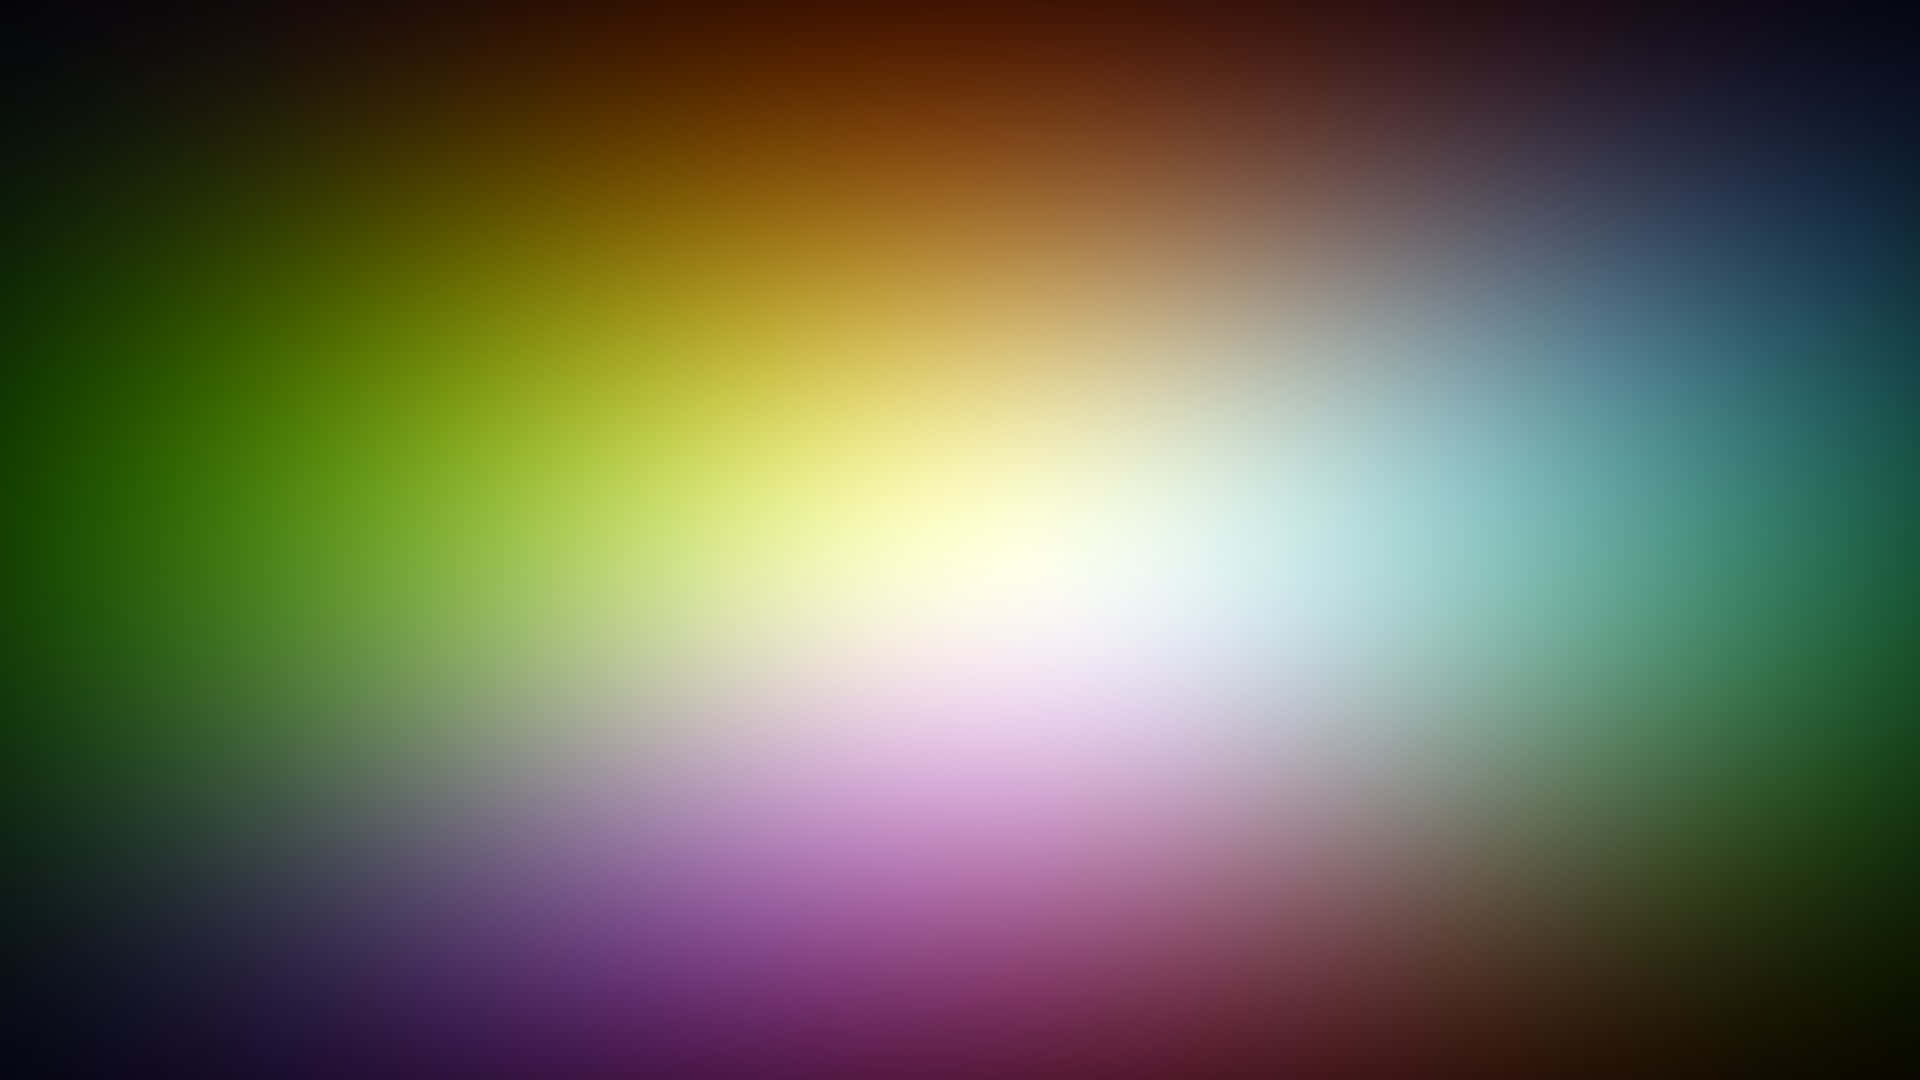 Vibrant Color Spectrum Gradient Wallpaper